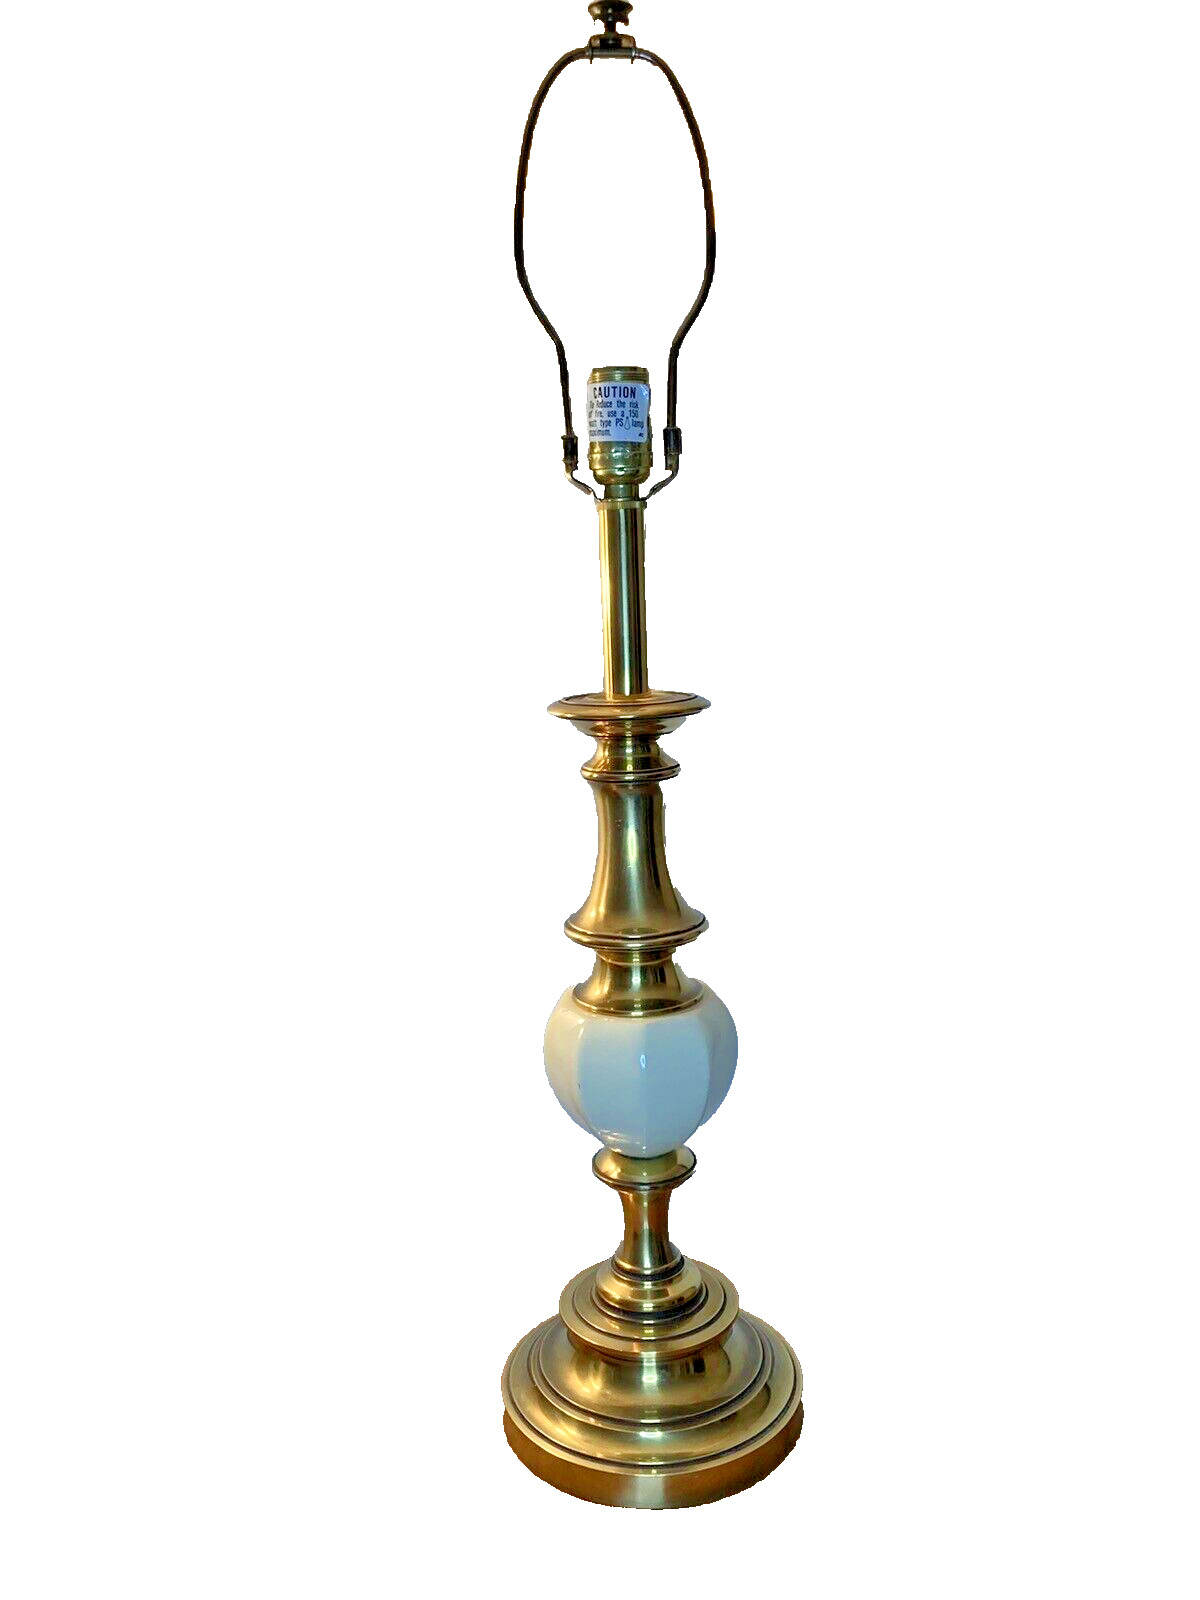 Vintage Stiffel Ivory Enamel & Brass Table Lamp #6082 3-Way Switch Hollywood Reg